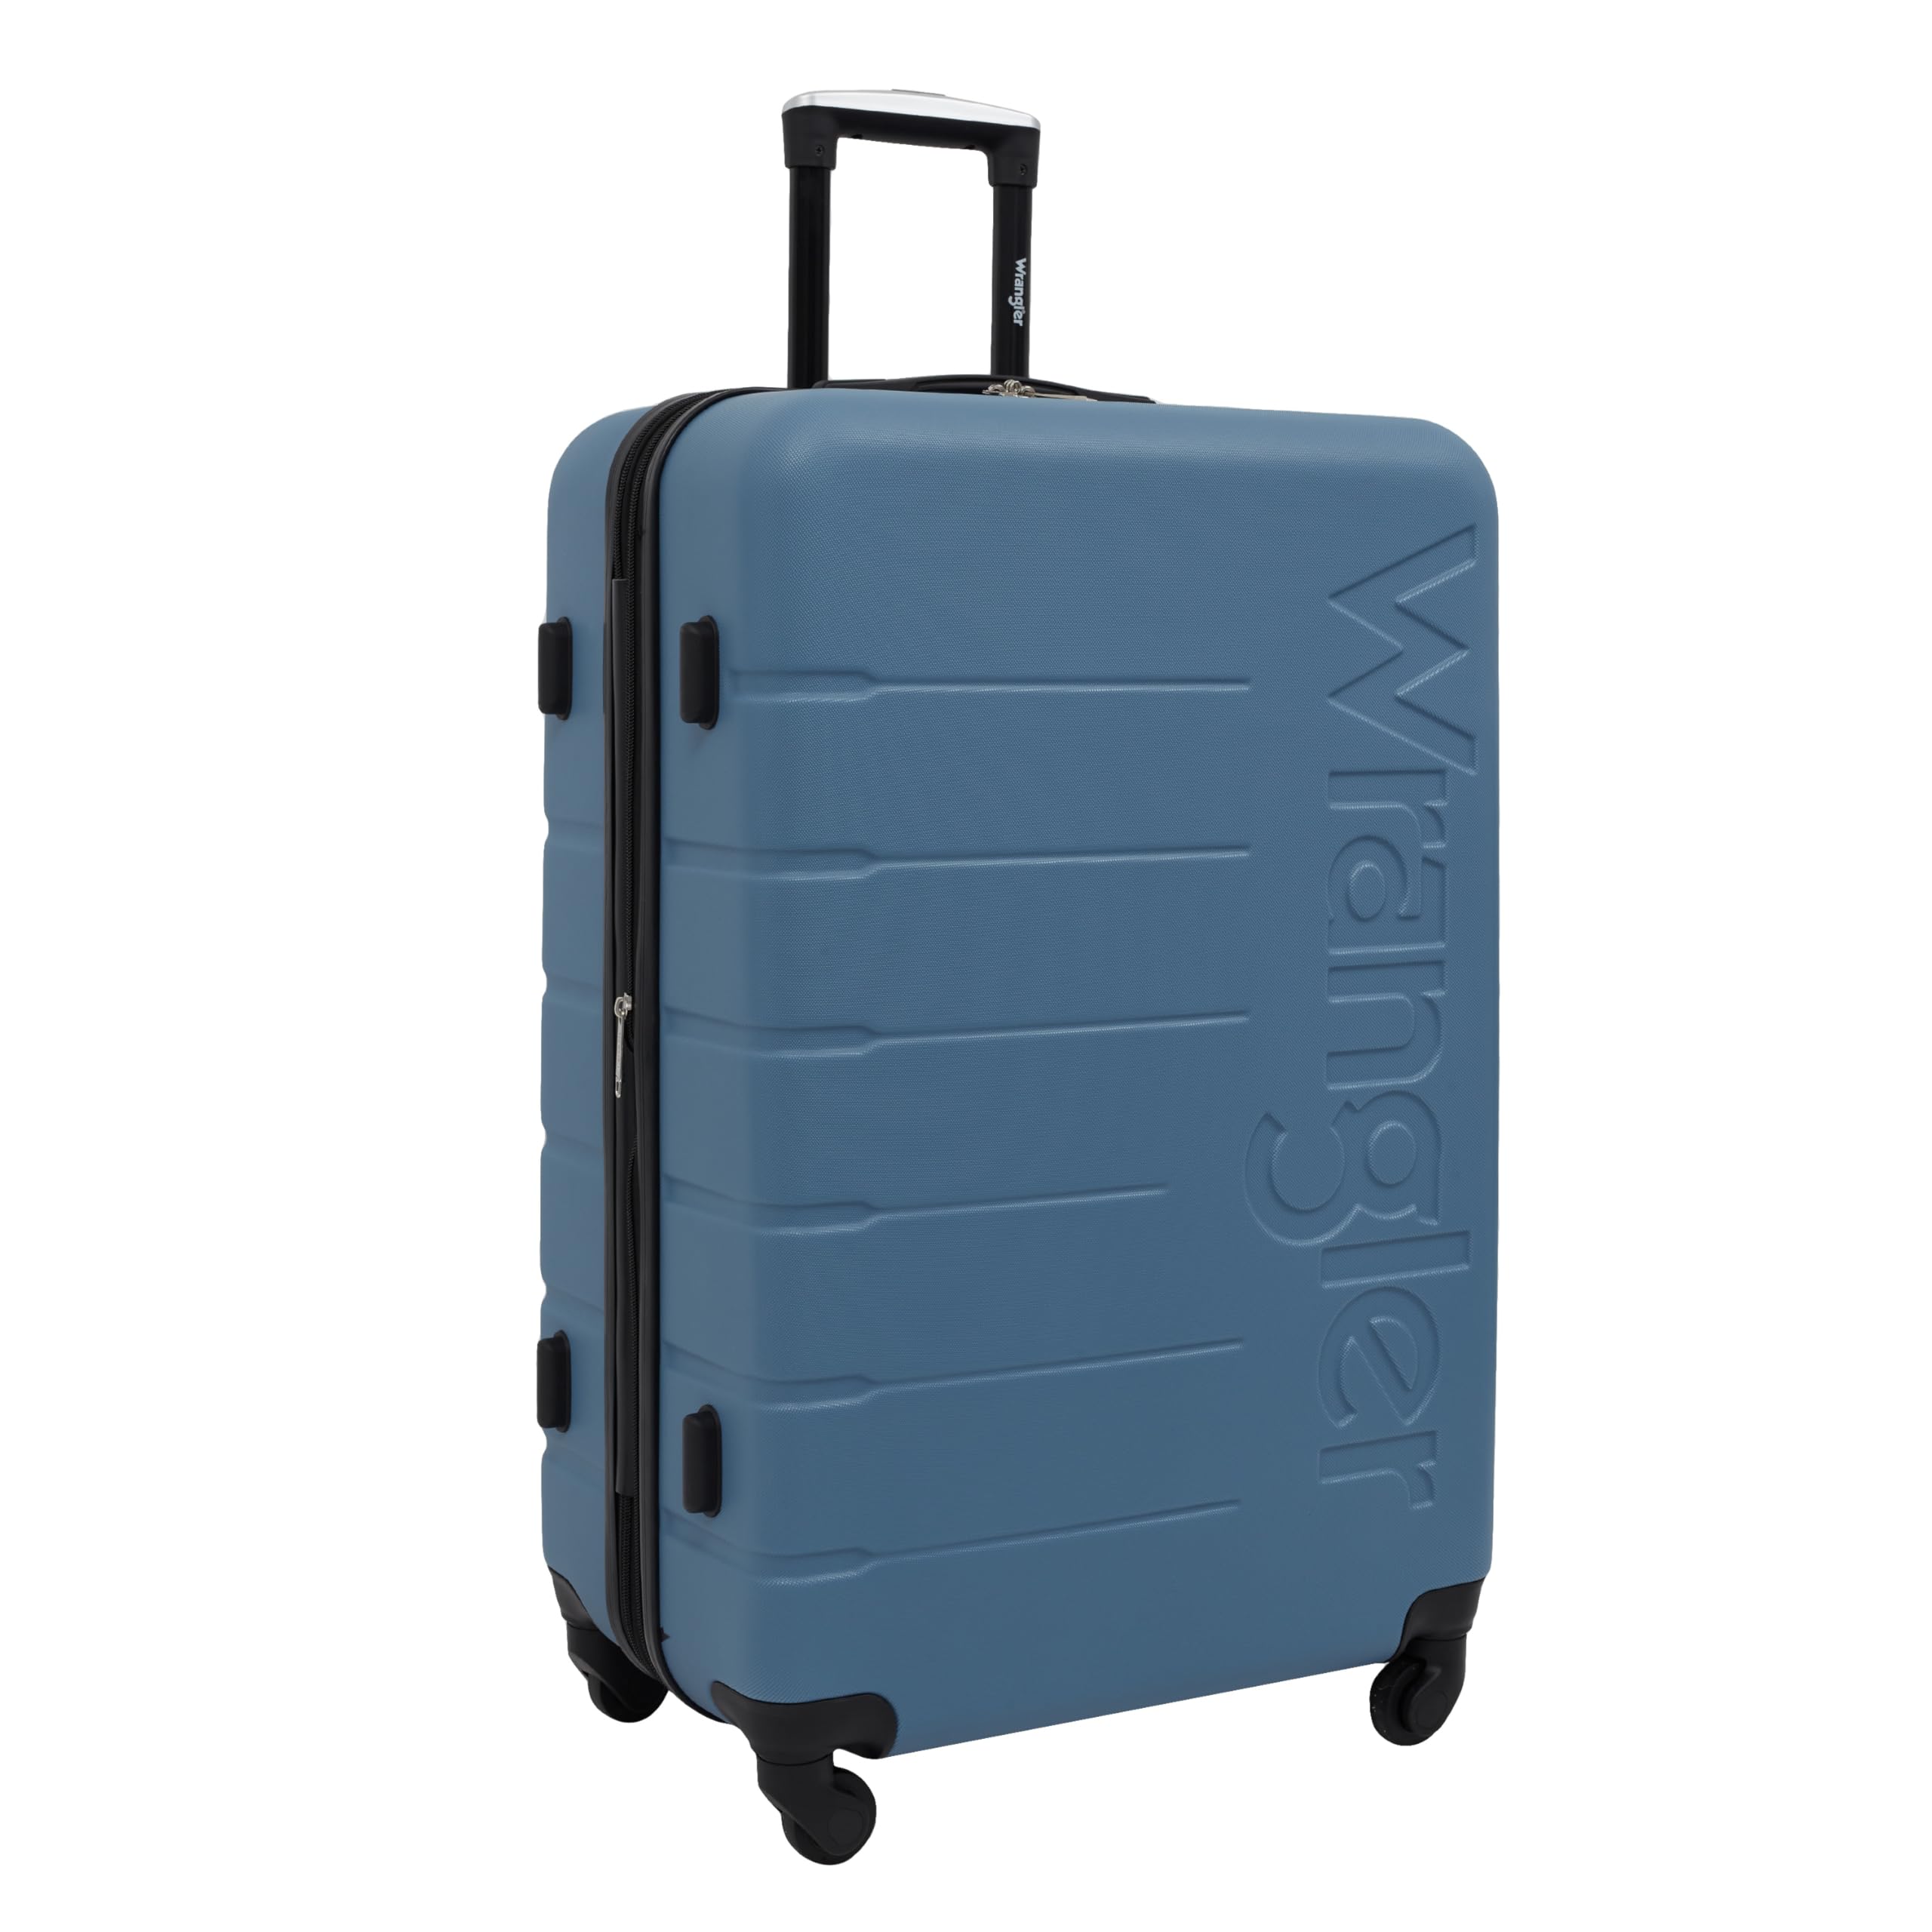 Wrangler Maverick 3 Piece Luggage Set, Blue Heaven